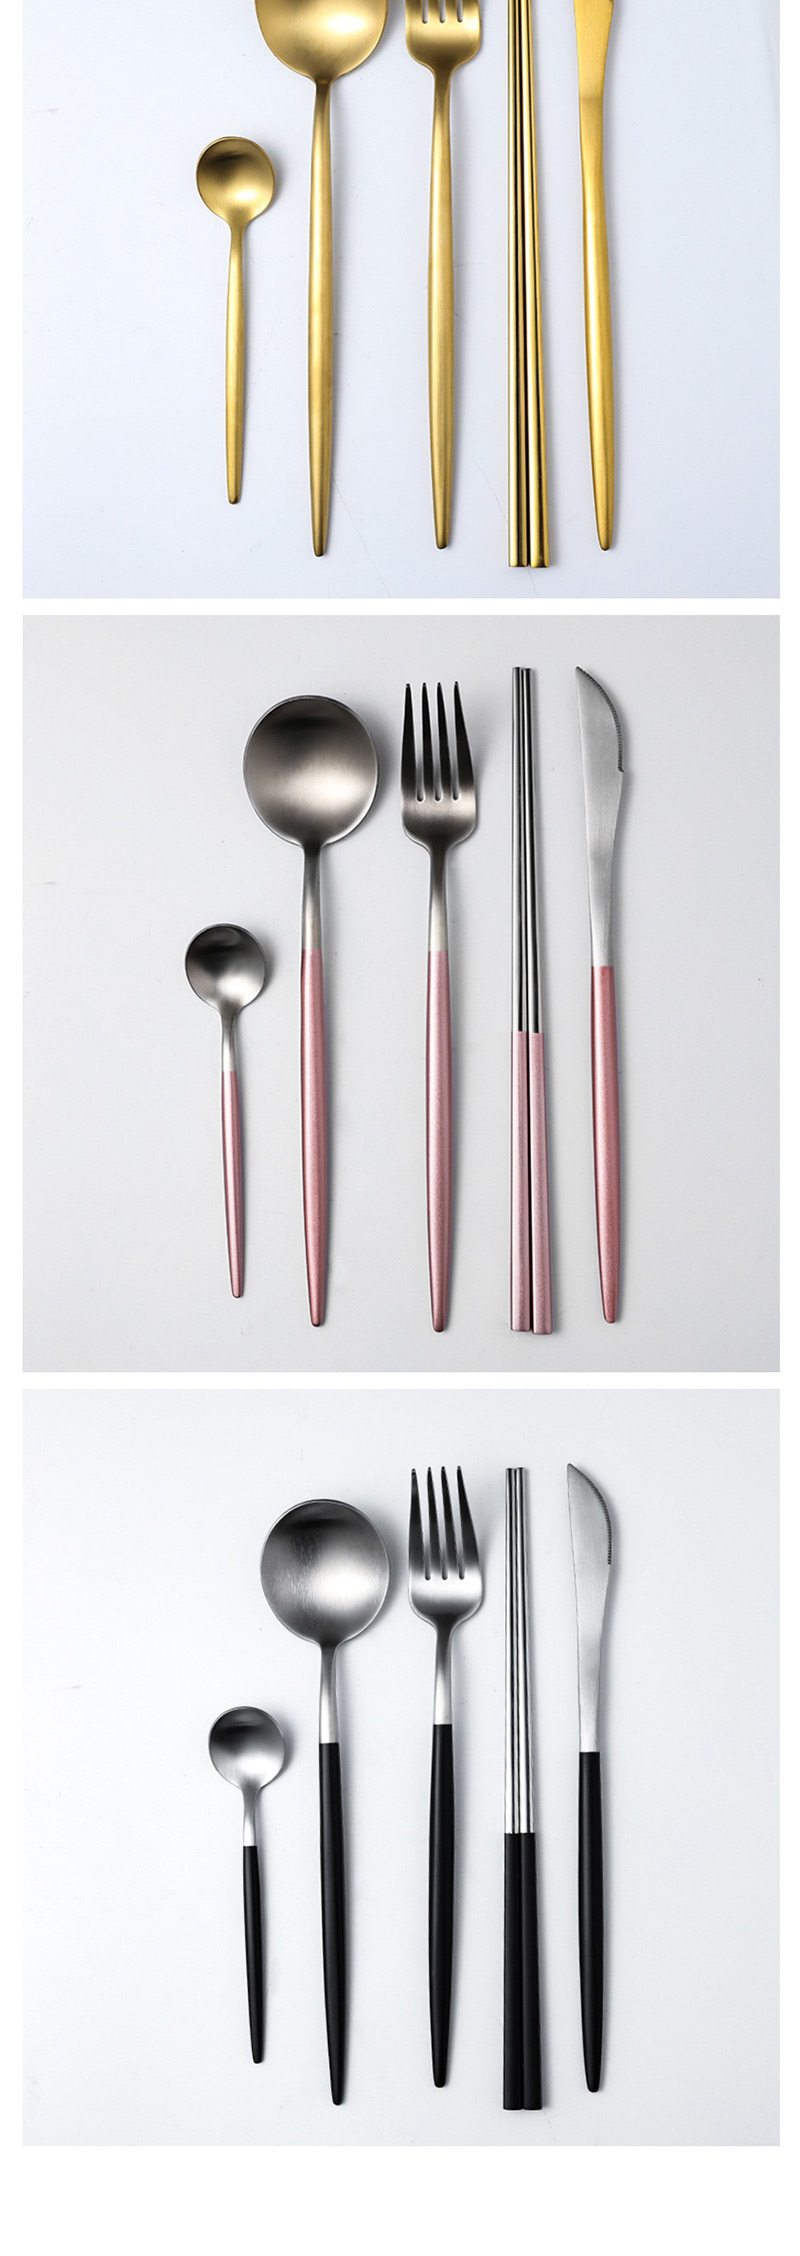 Fashion 4 Sets Of Powder Gold (cutlery Spoon + Chopsticks) 304 Stainless Steel Cutlery Cutlery Set,Kitchen